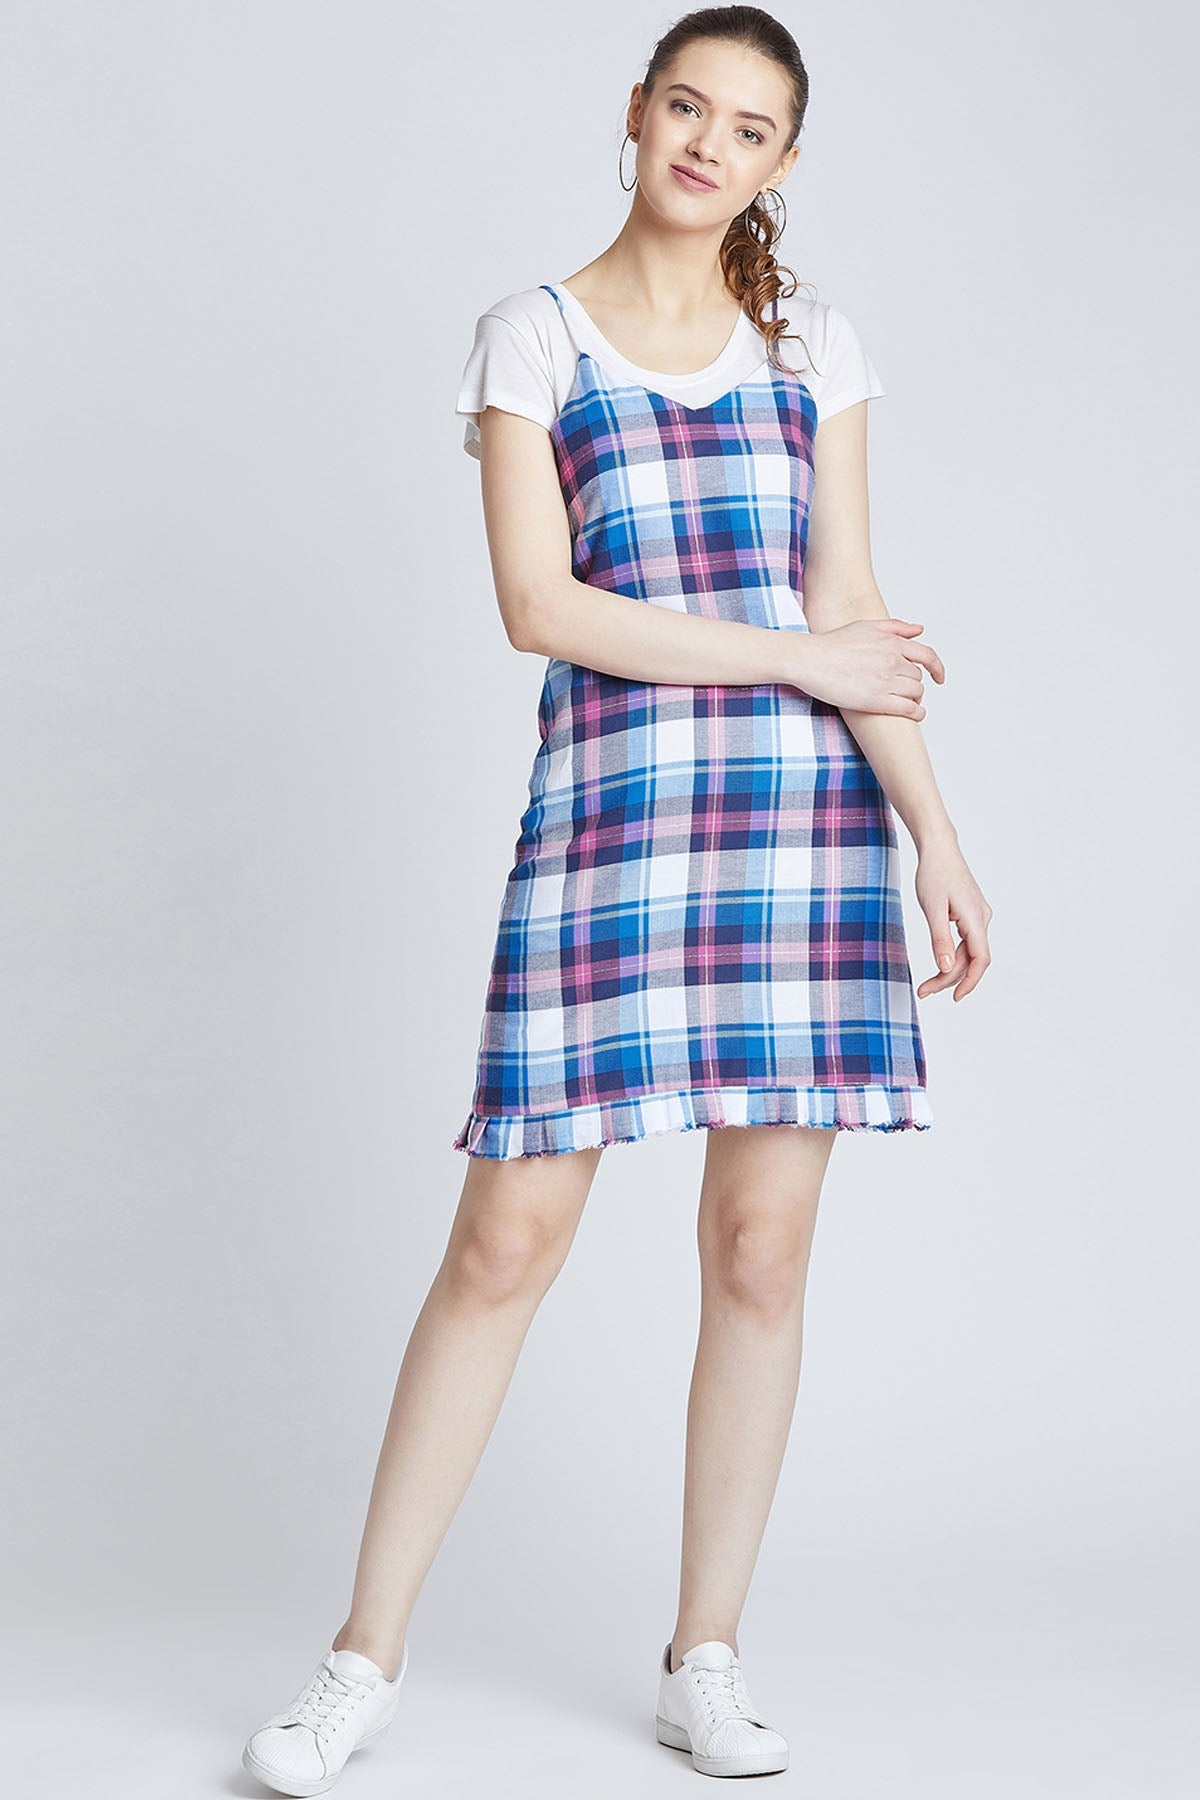 Bohobi Blue Tweed Checkered Dress For Women Online at ScrollnShops